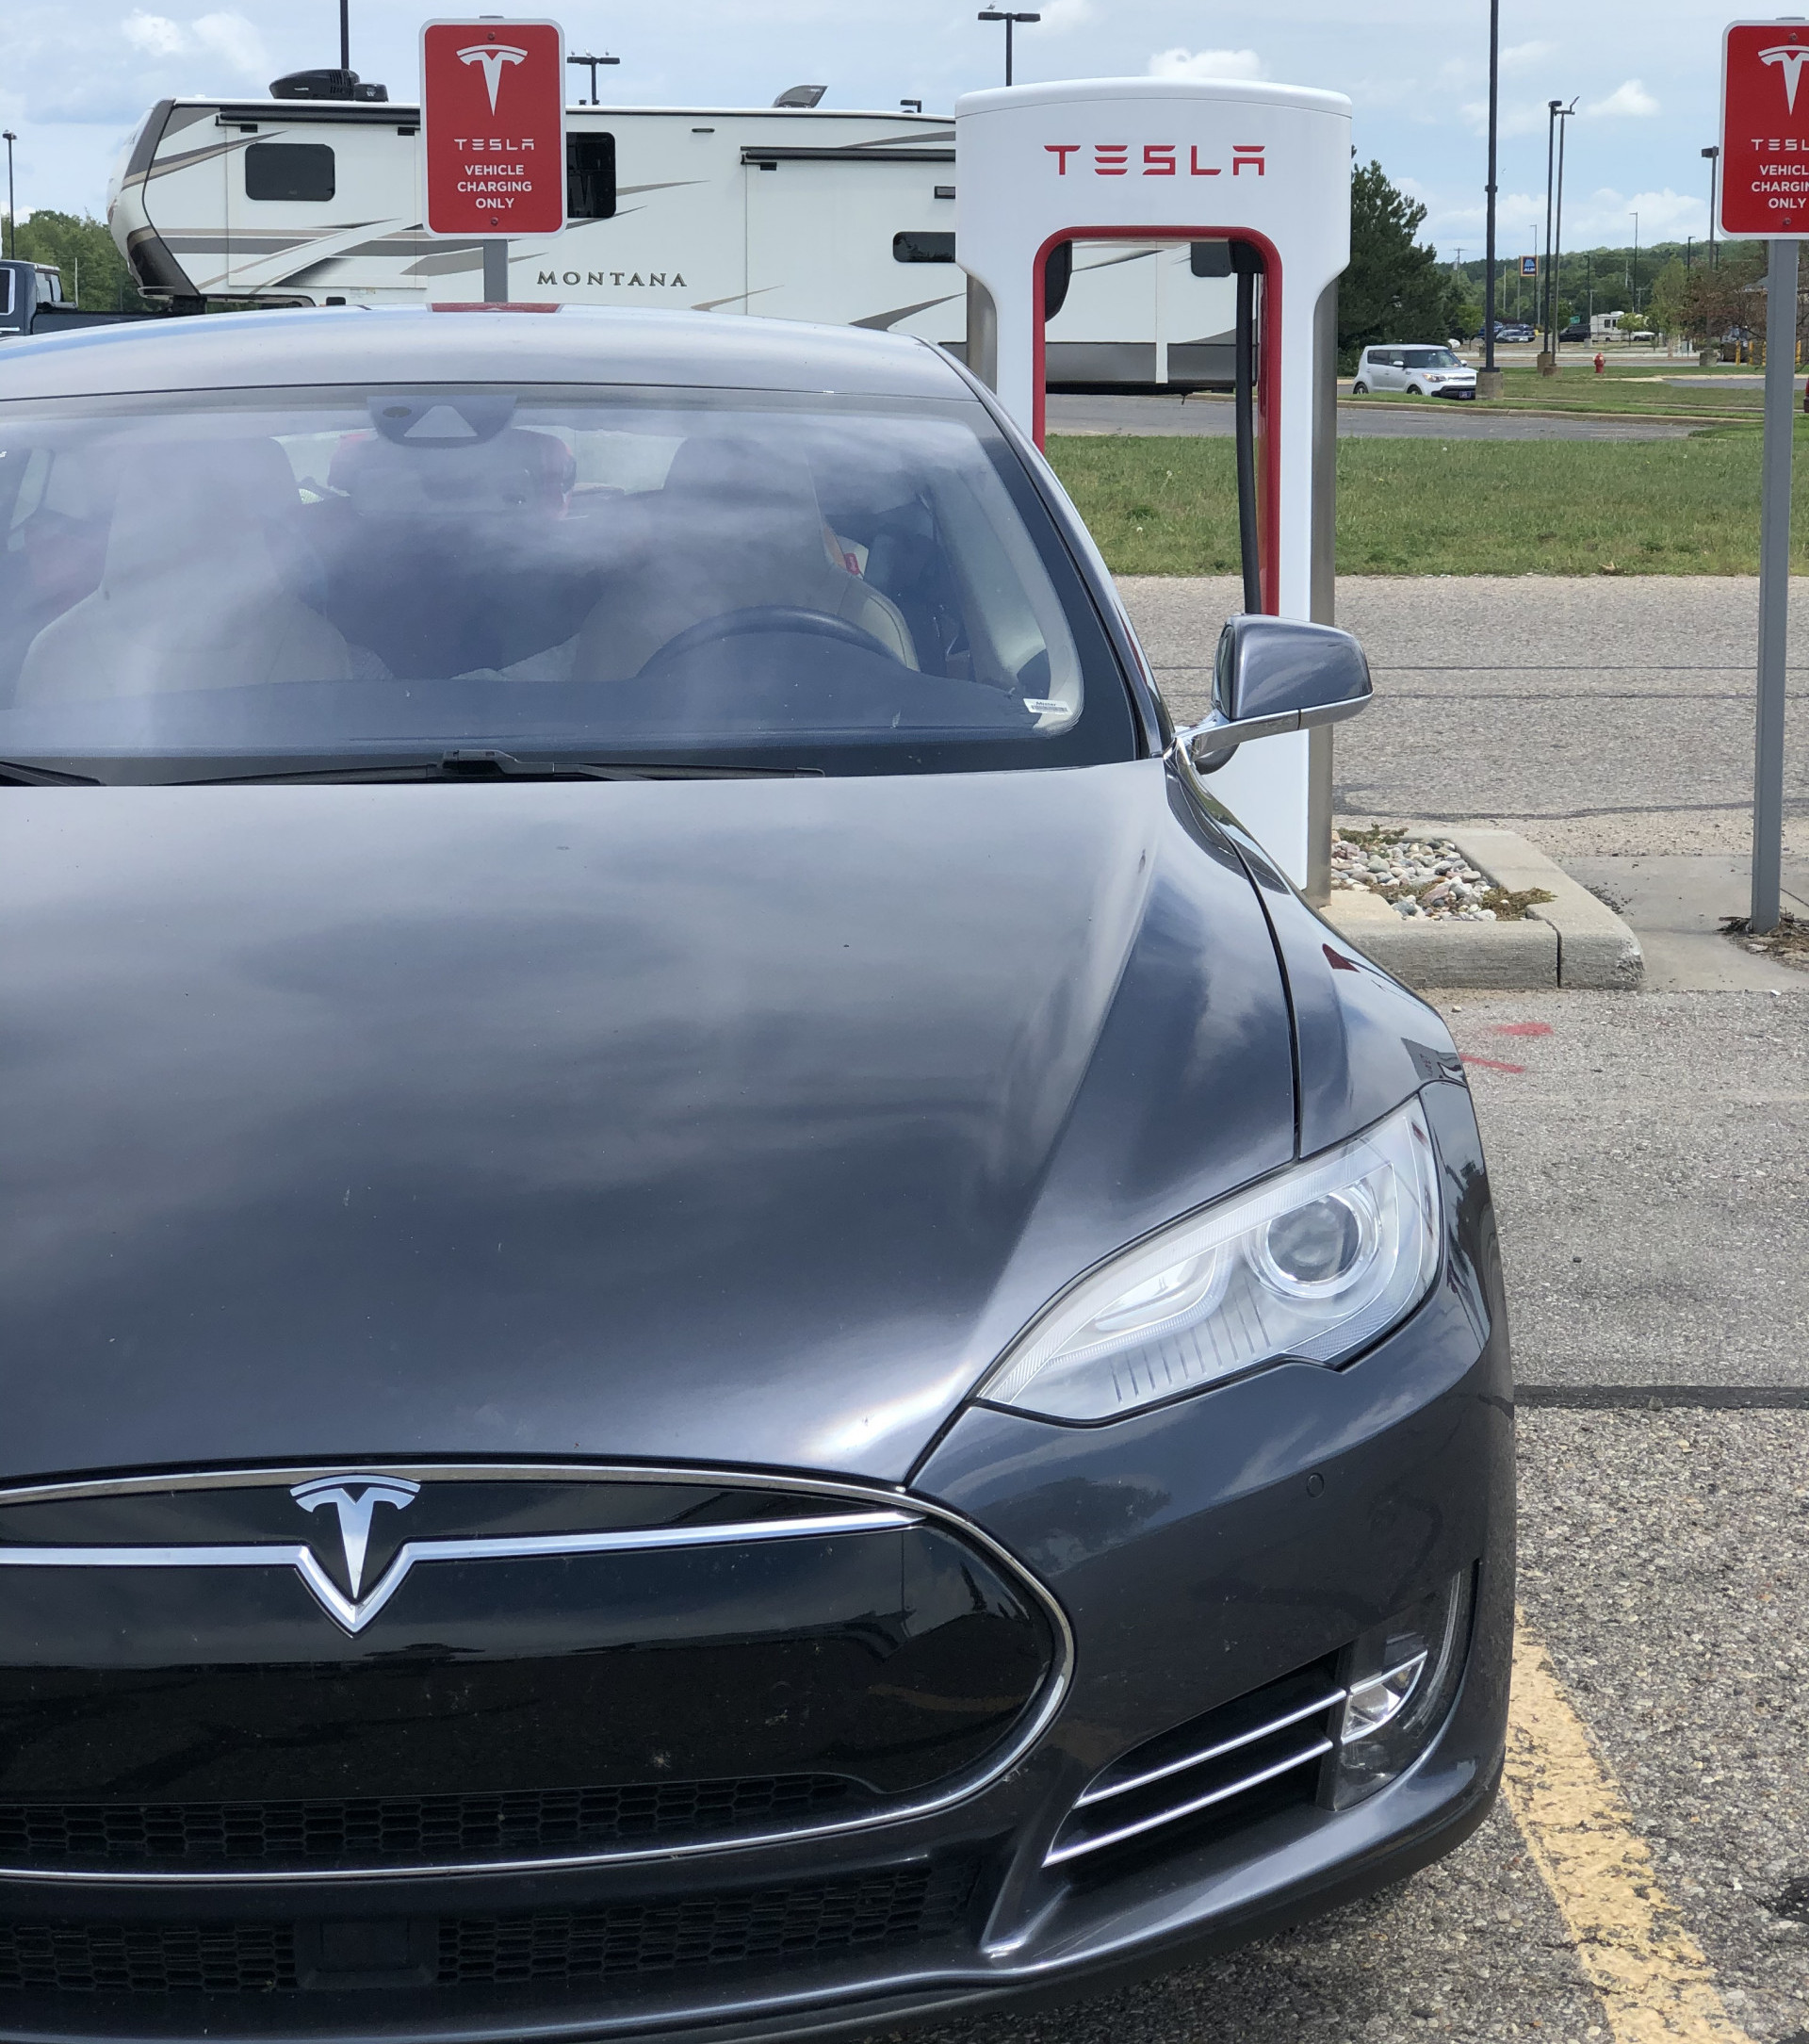 My 2015 Tesla, Model S, parked at a supercharging station